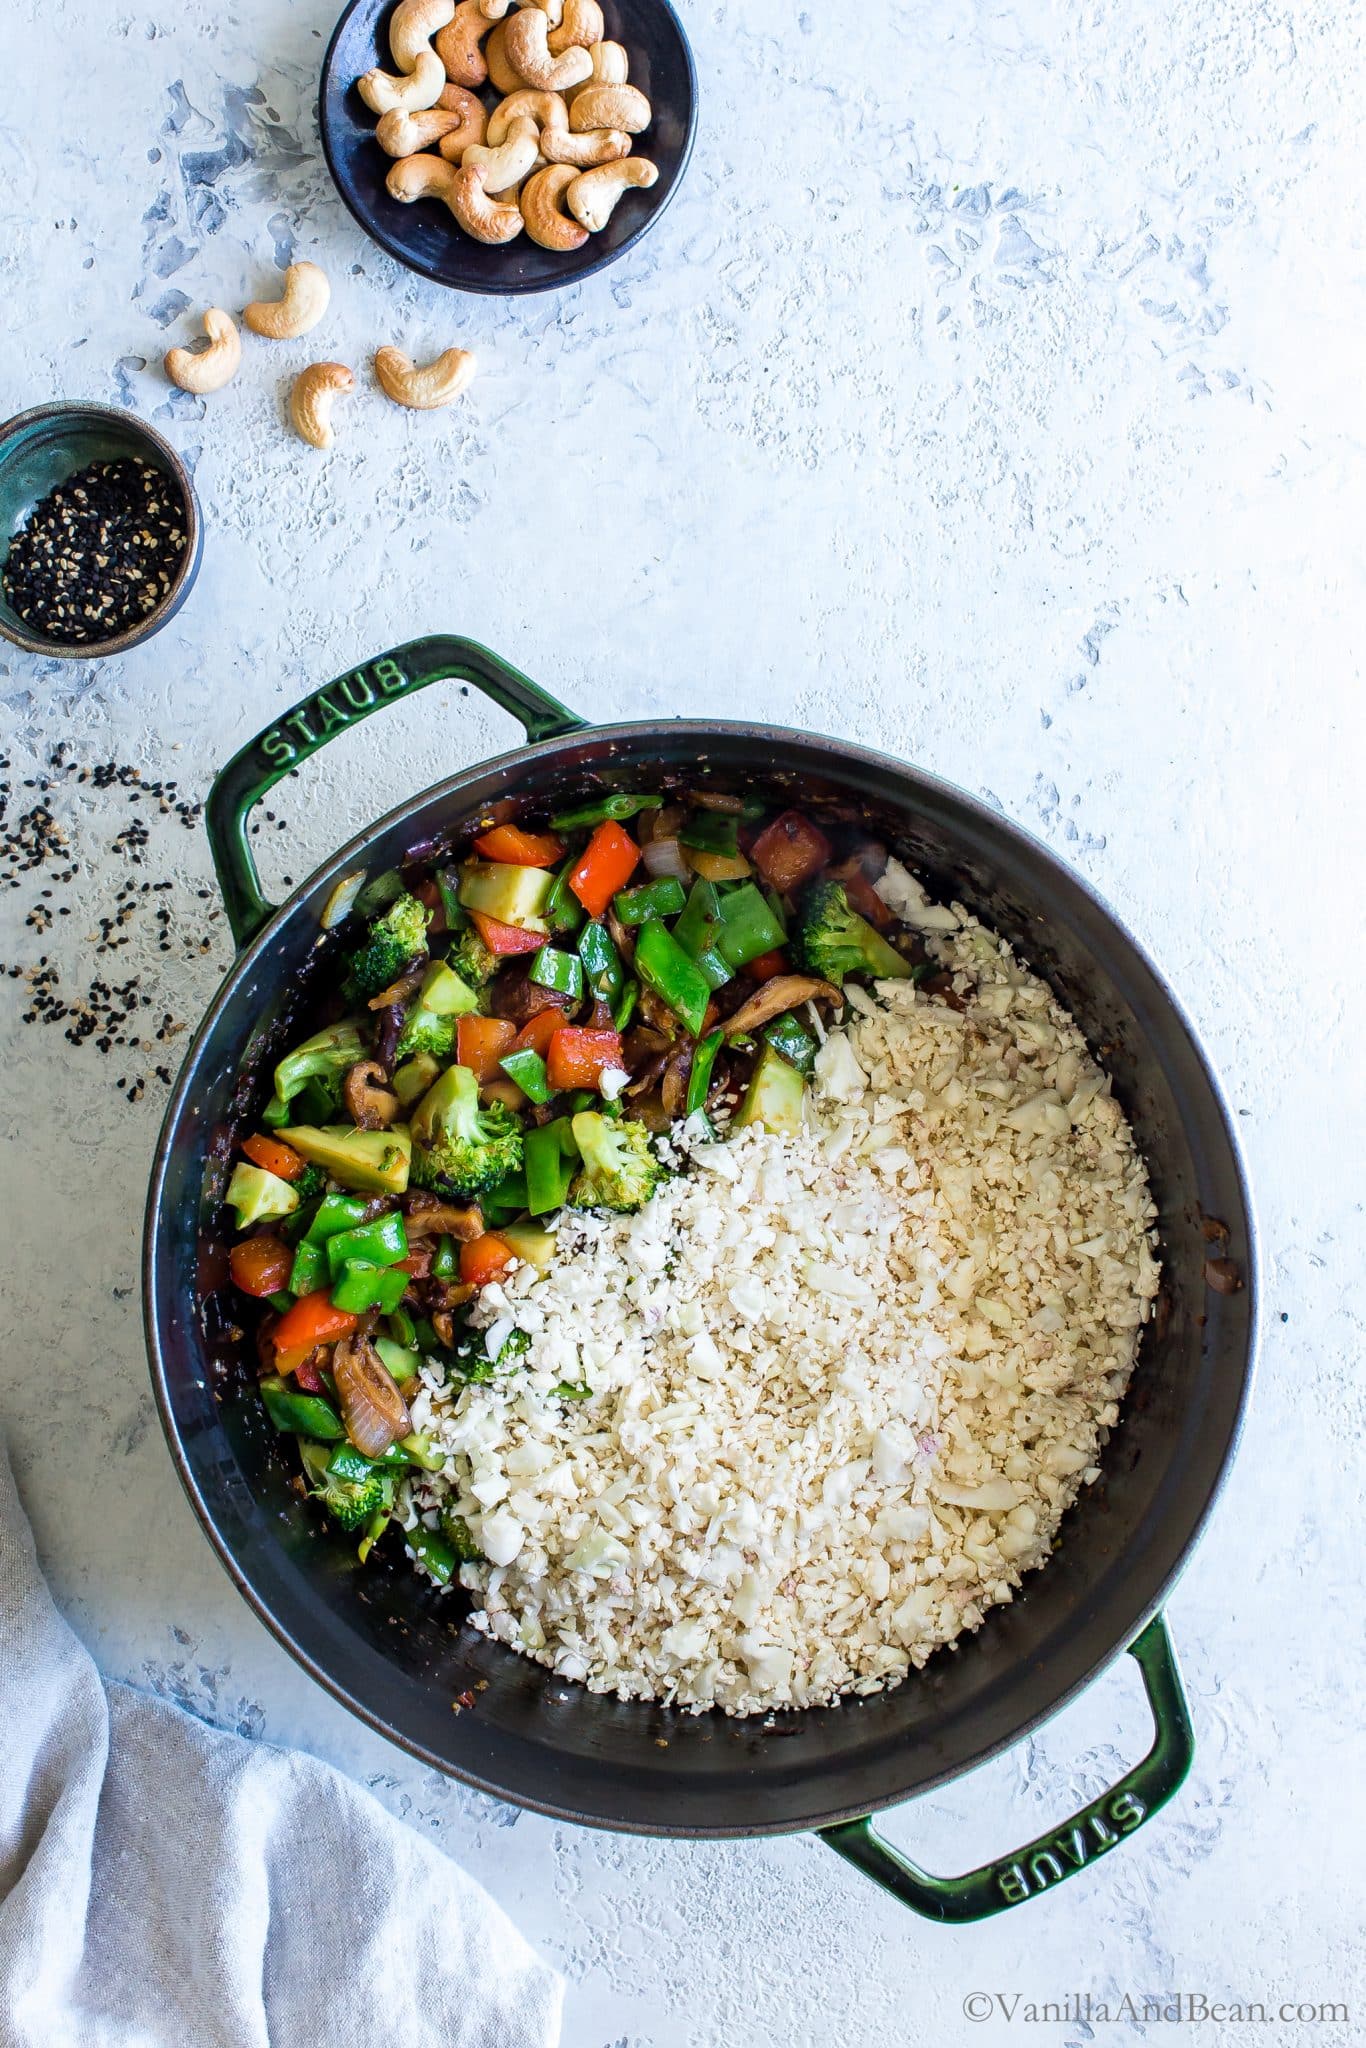 Add the cauliflower rice to the sauted veggies. 